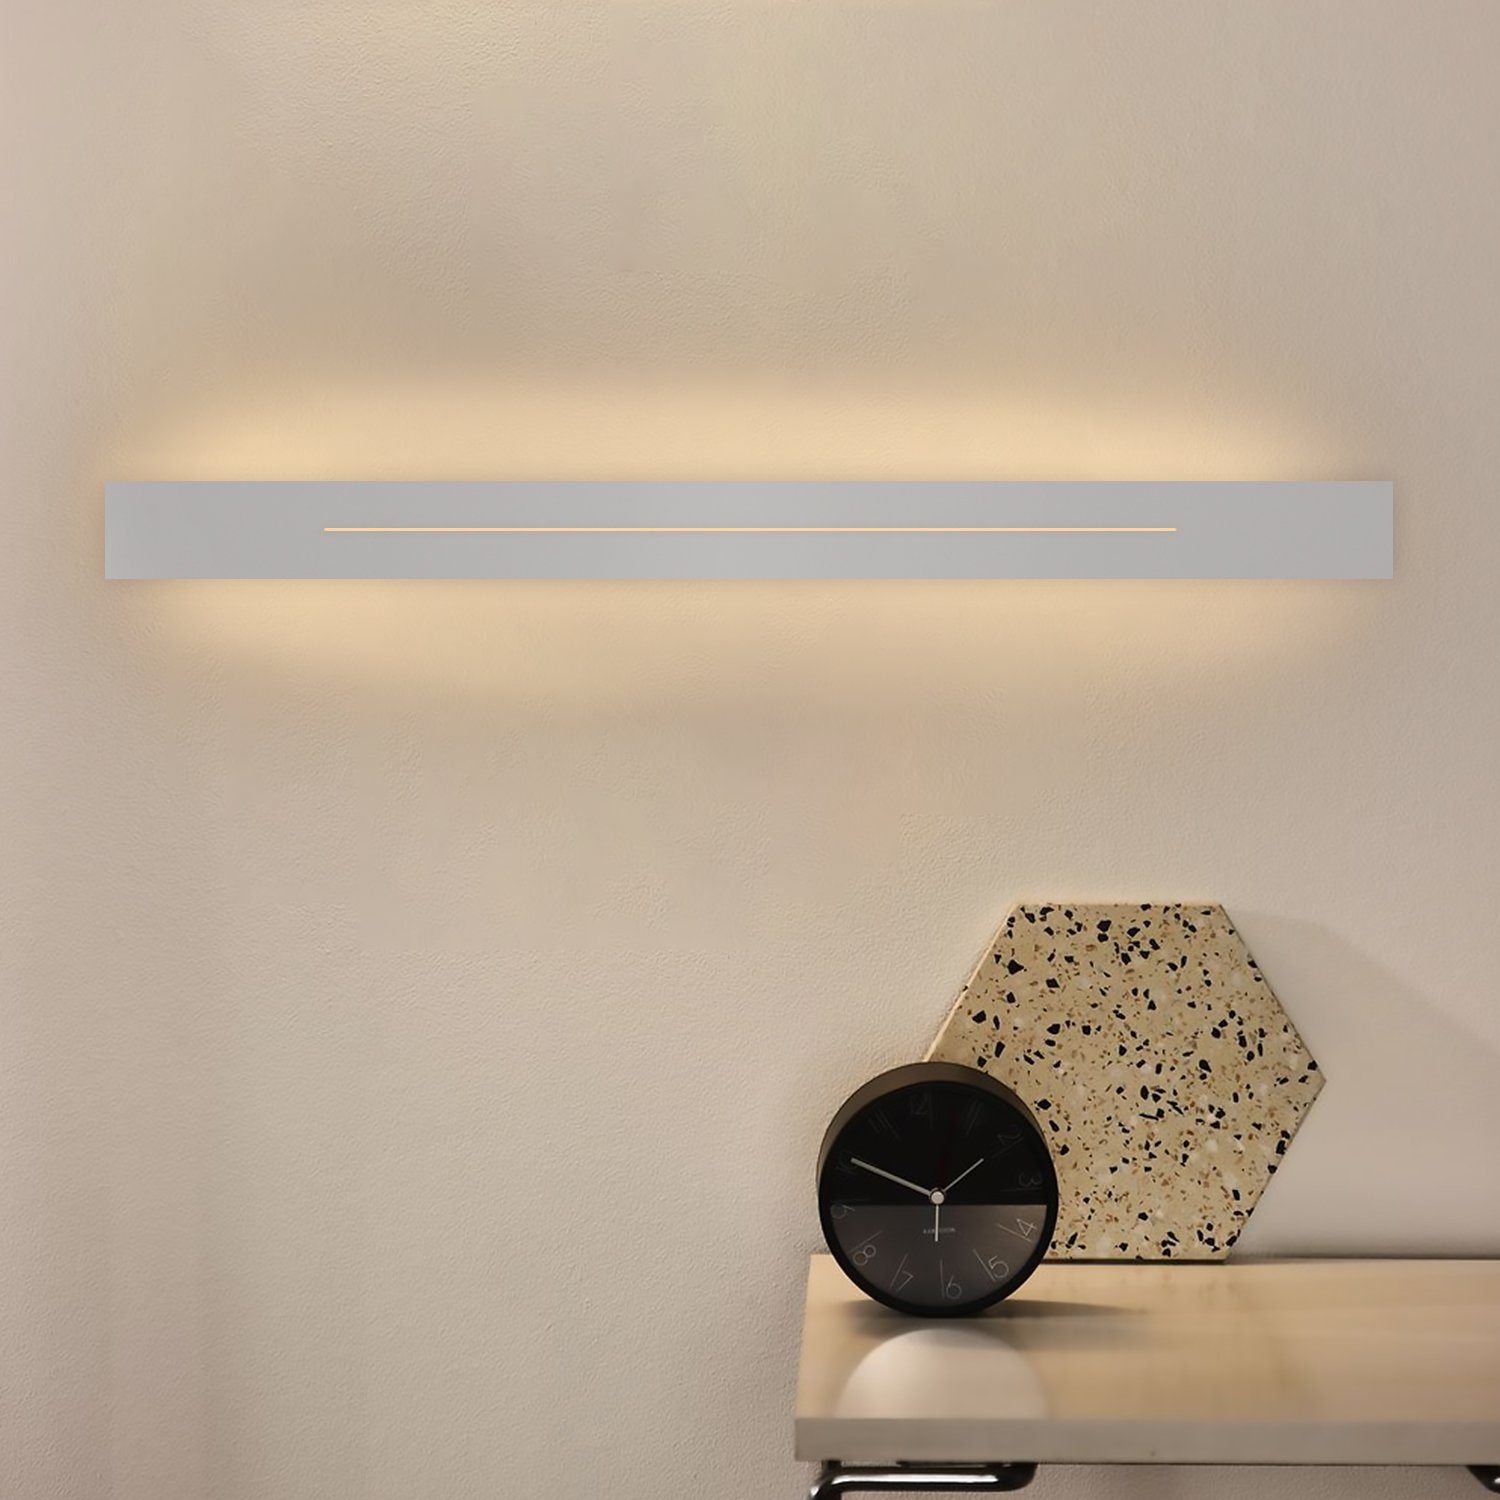 ZMH 60cm 60cm LED weiß/schwarz LED Wandlampe 30cm warmweiß, innen 100cm, fest Weiß Wandleuchte integriert,